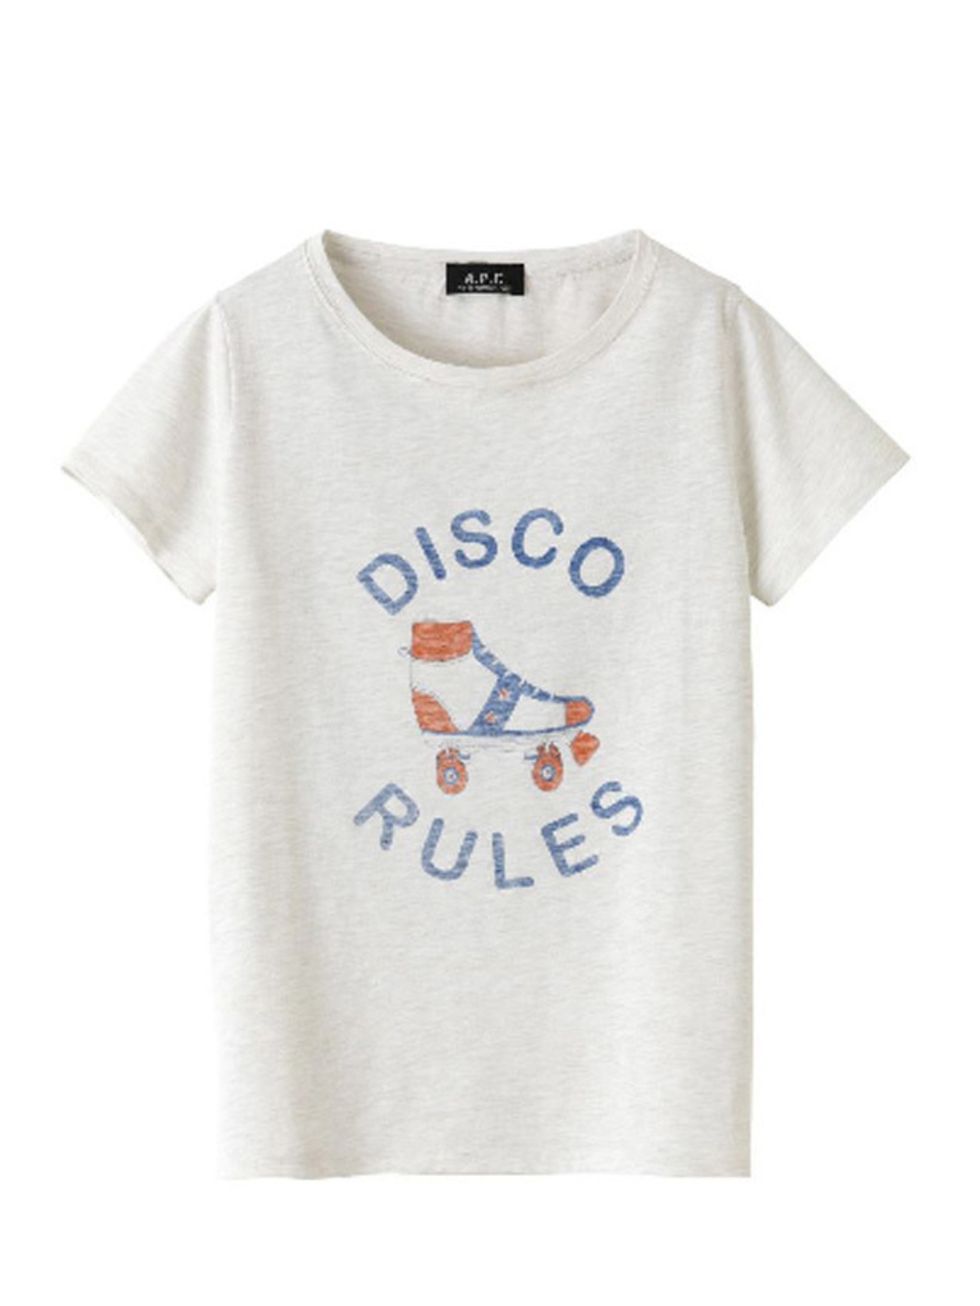 <p>'Disco' print T-shirt, £35, by APC (0207 409 0121)</p>